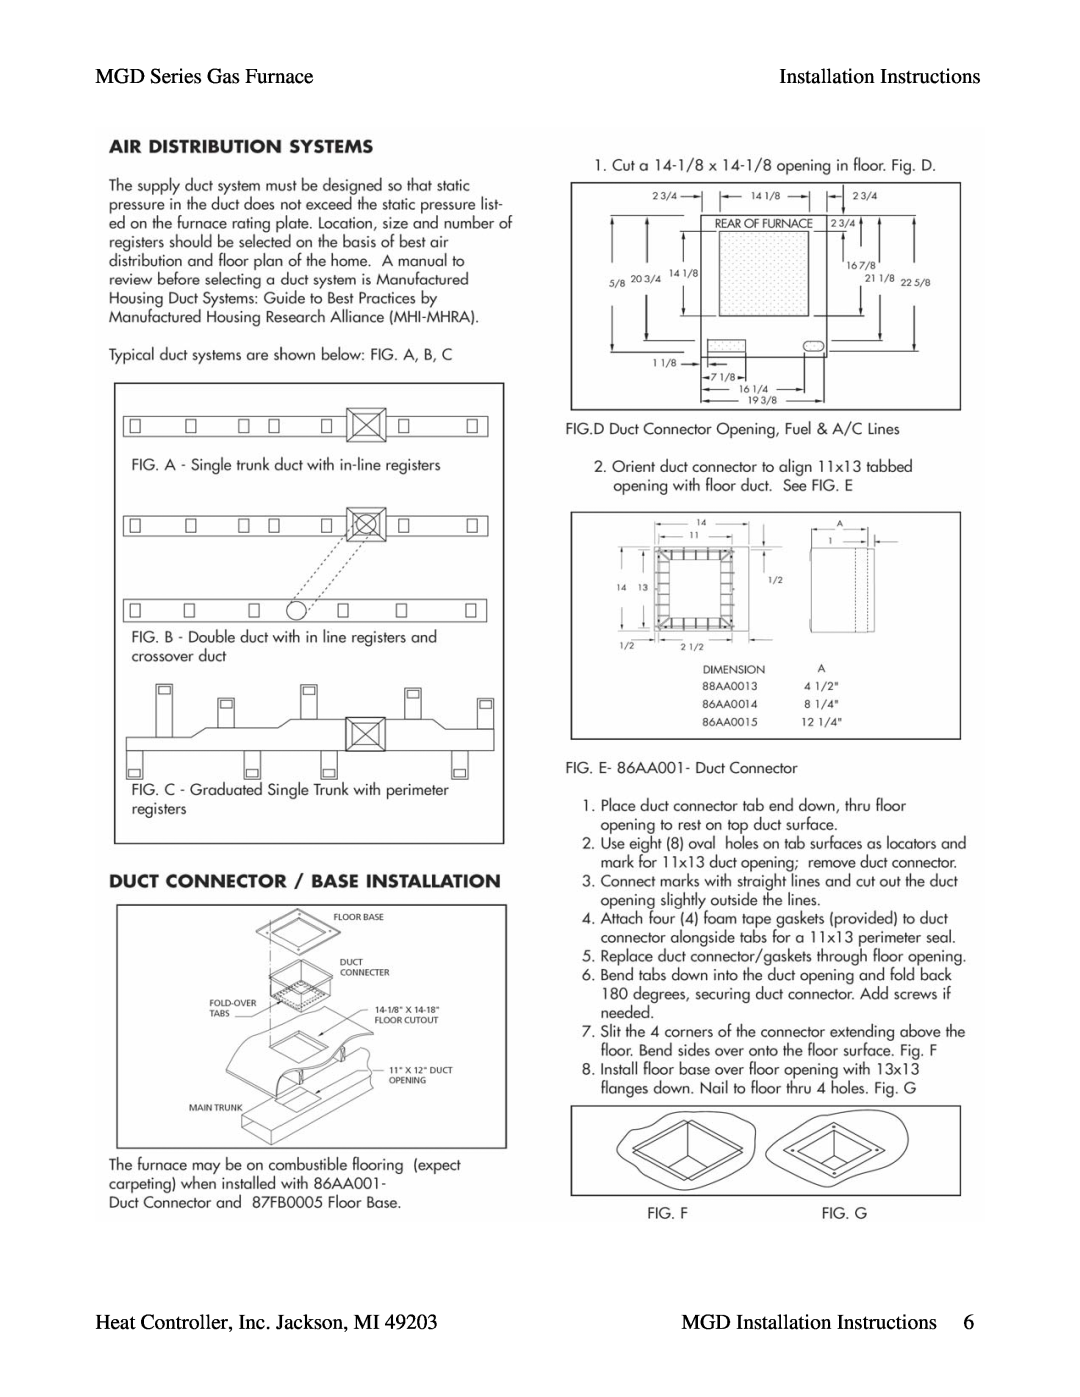 Heat Controller MGD90-E5A, MGD90-E3A MGD Series Gas Furnace, Installation Instructions, Heat Controller, Inc. Jackson, MI 